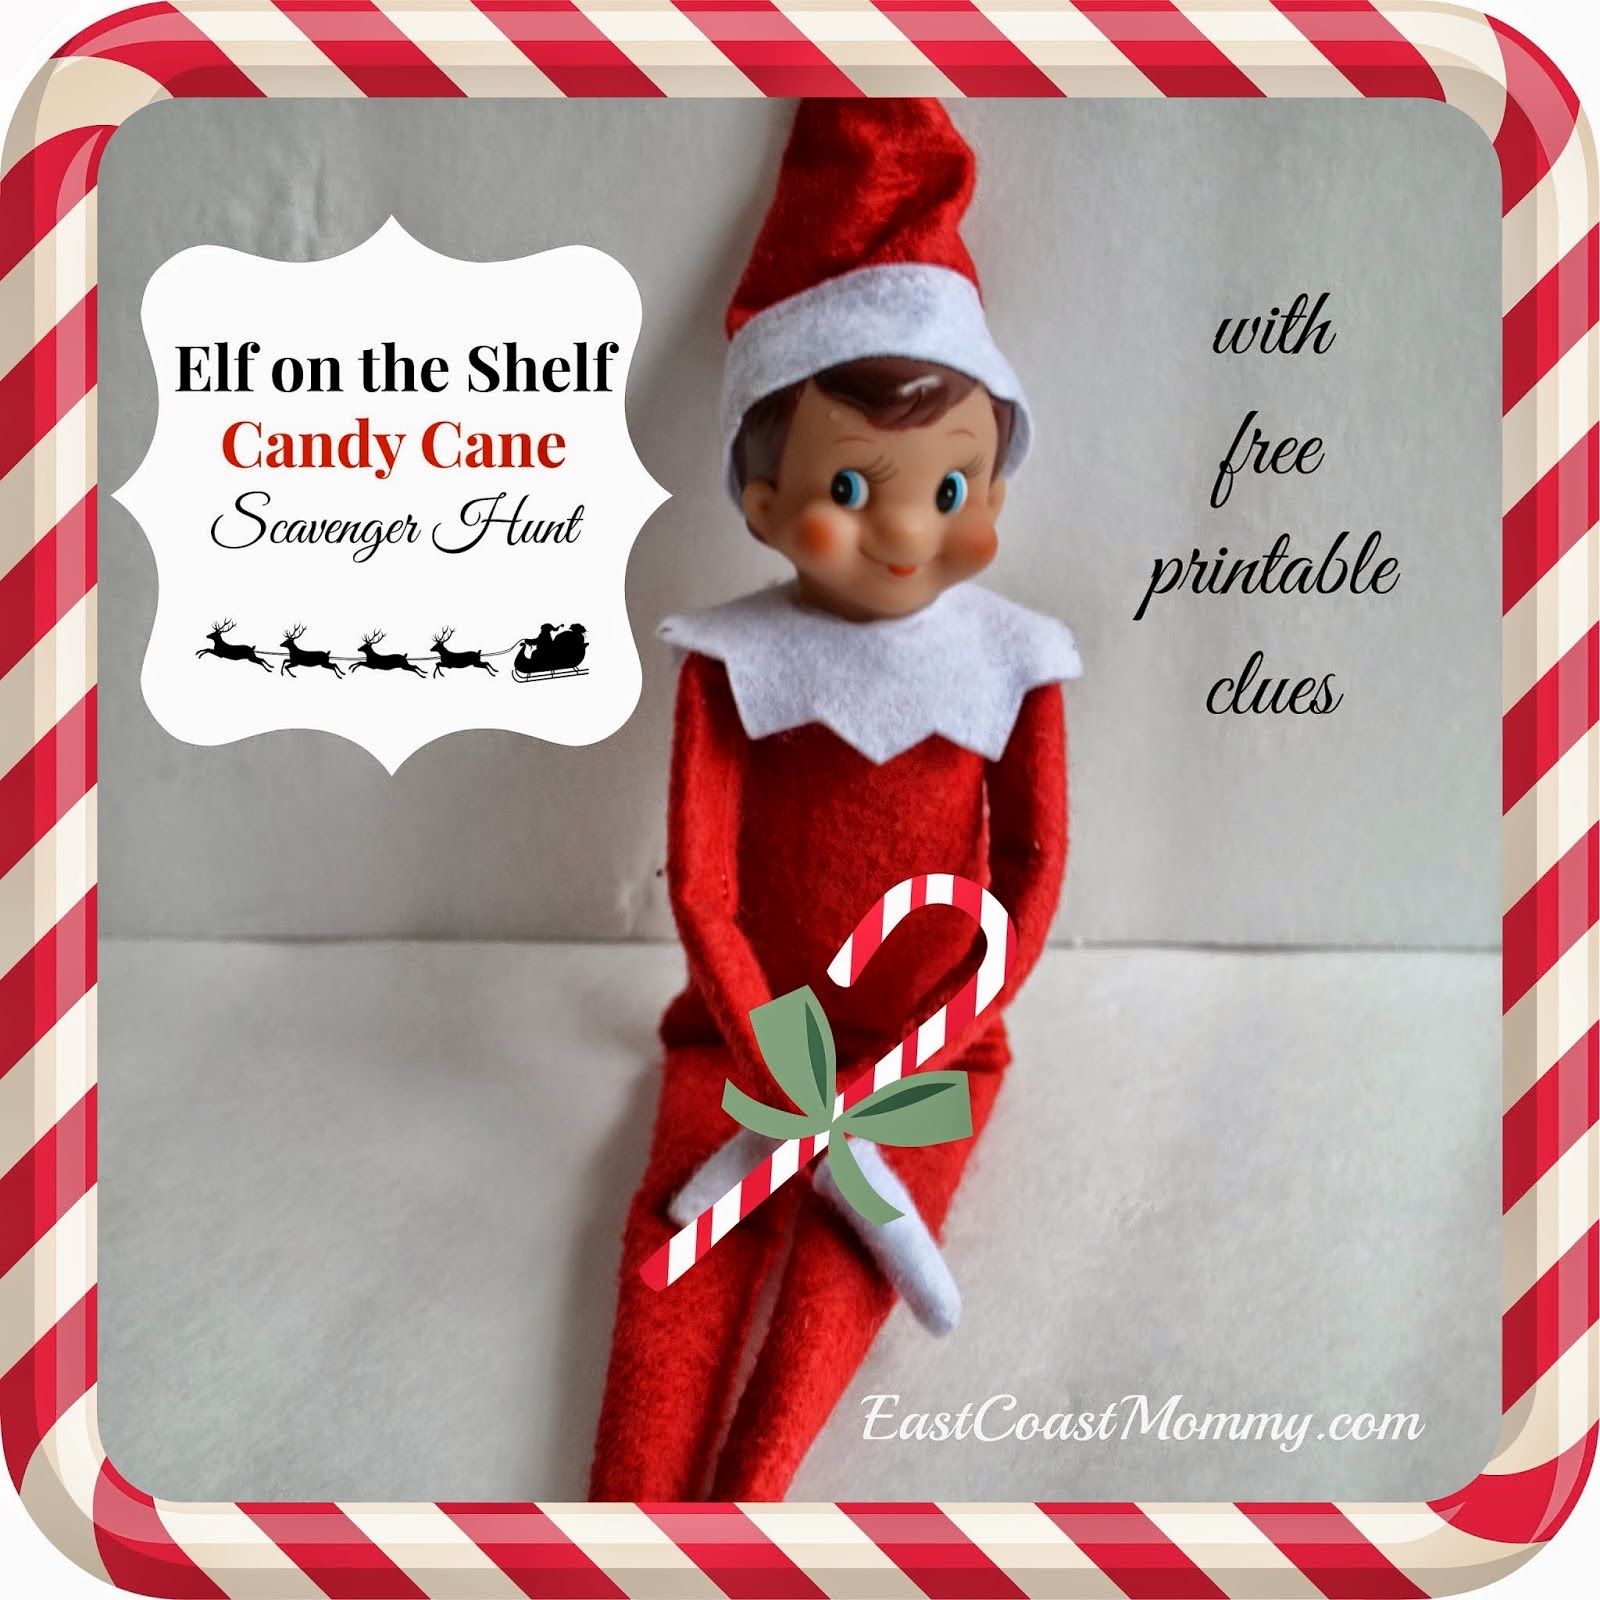 Elf on the Shelf makes a sugary shopping list. 